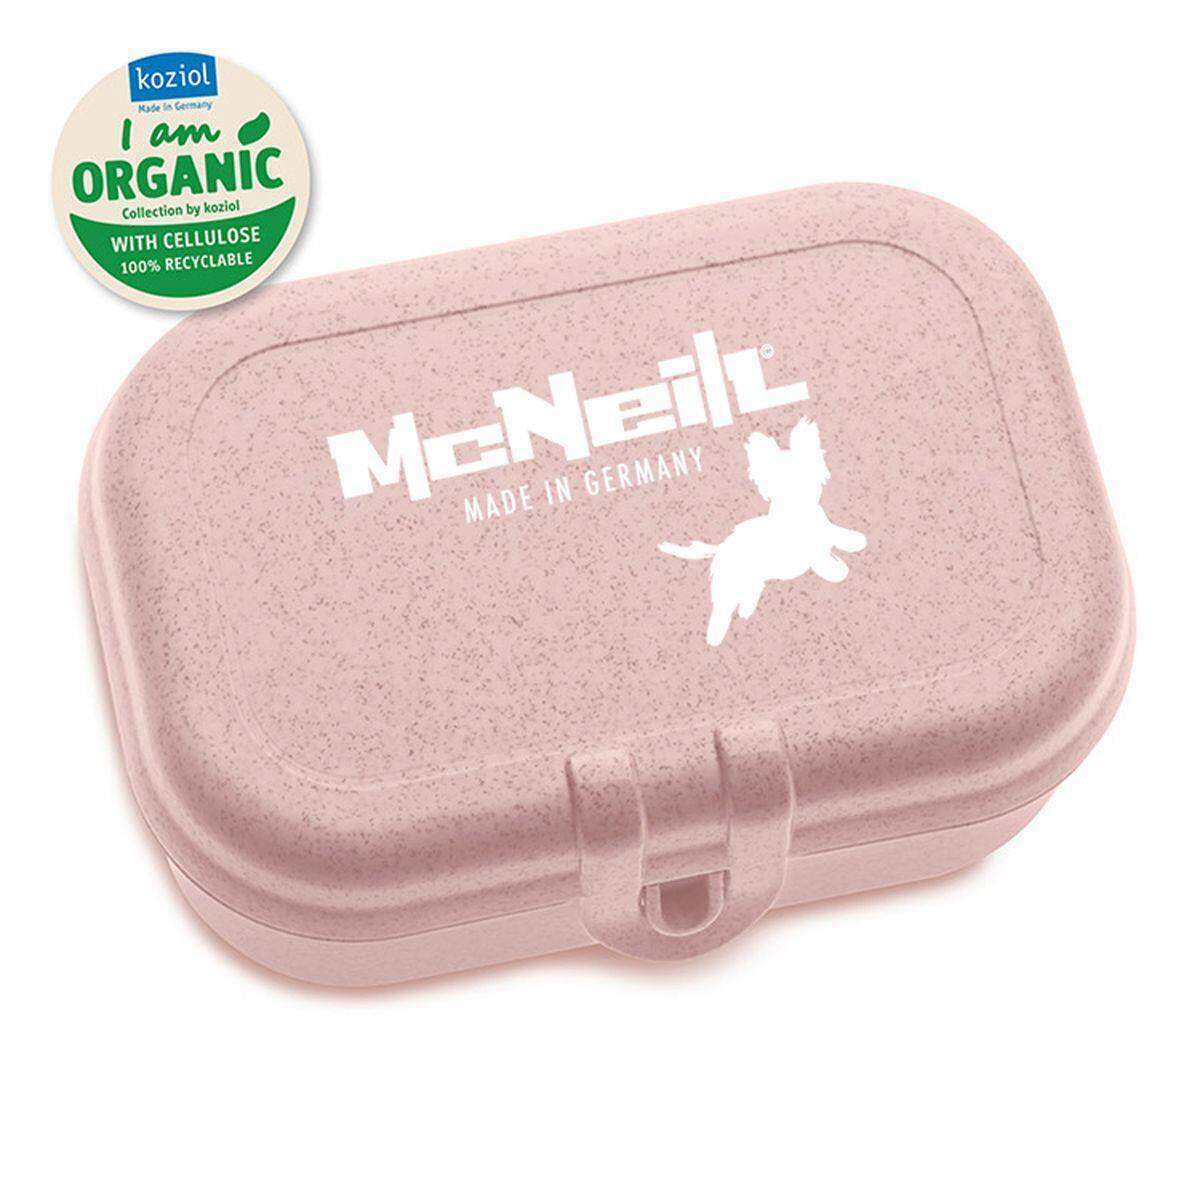 Mc Neill 'Koziol Pascal' Brotbox organic pink